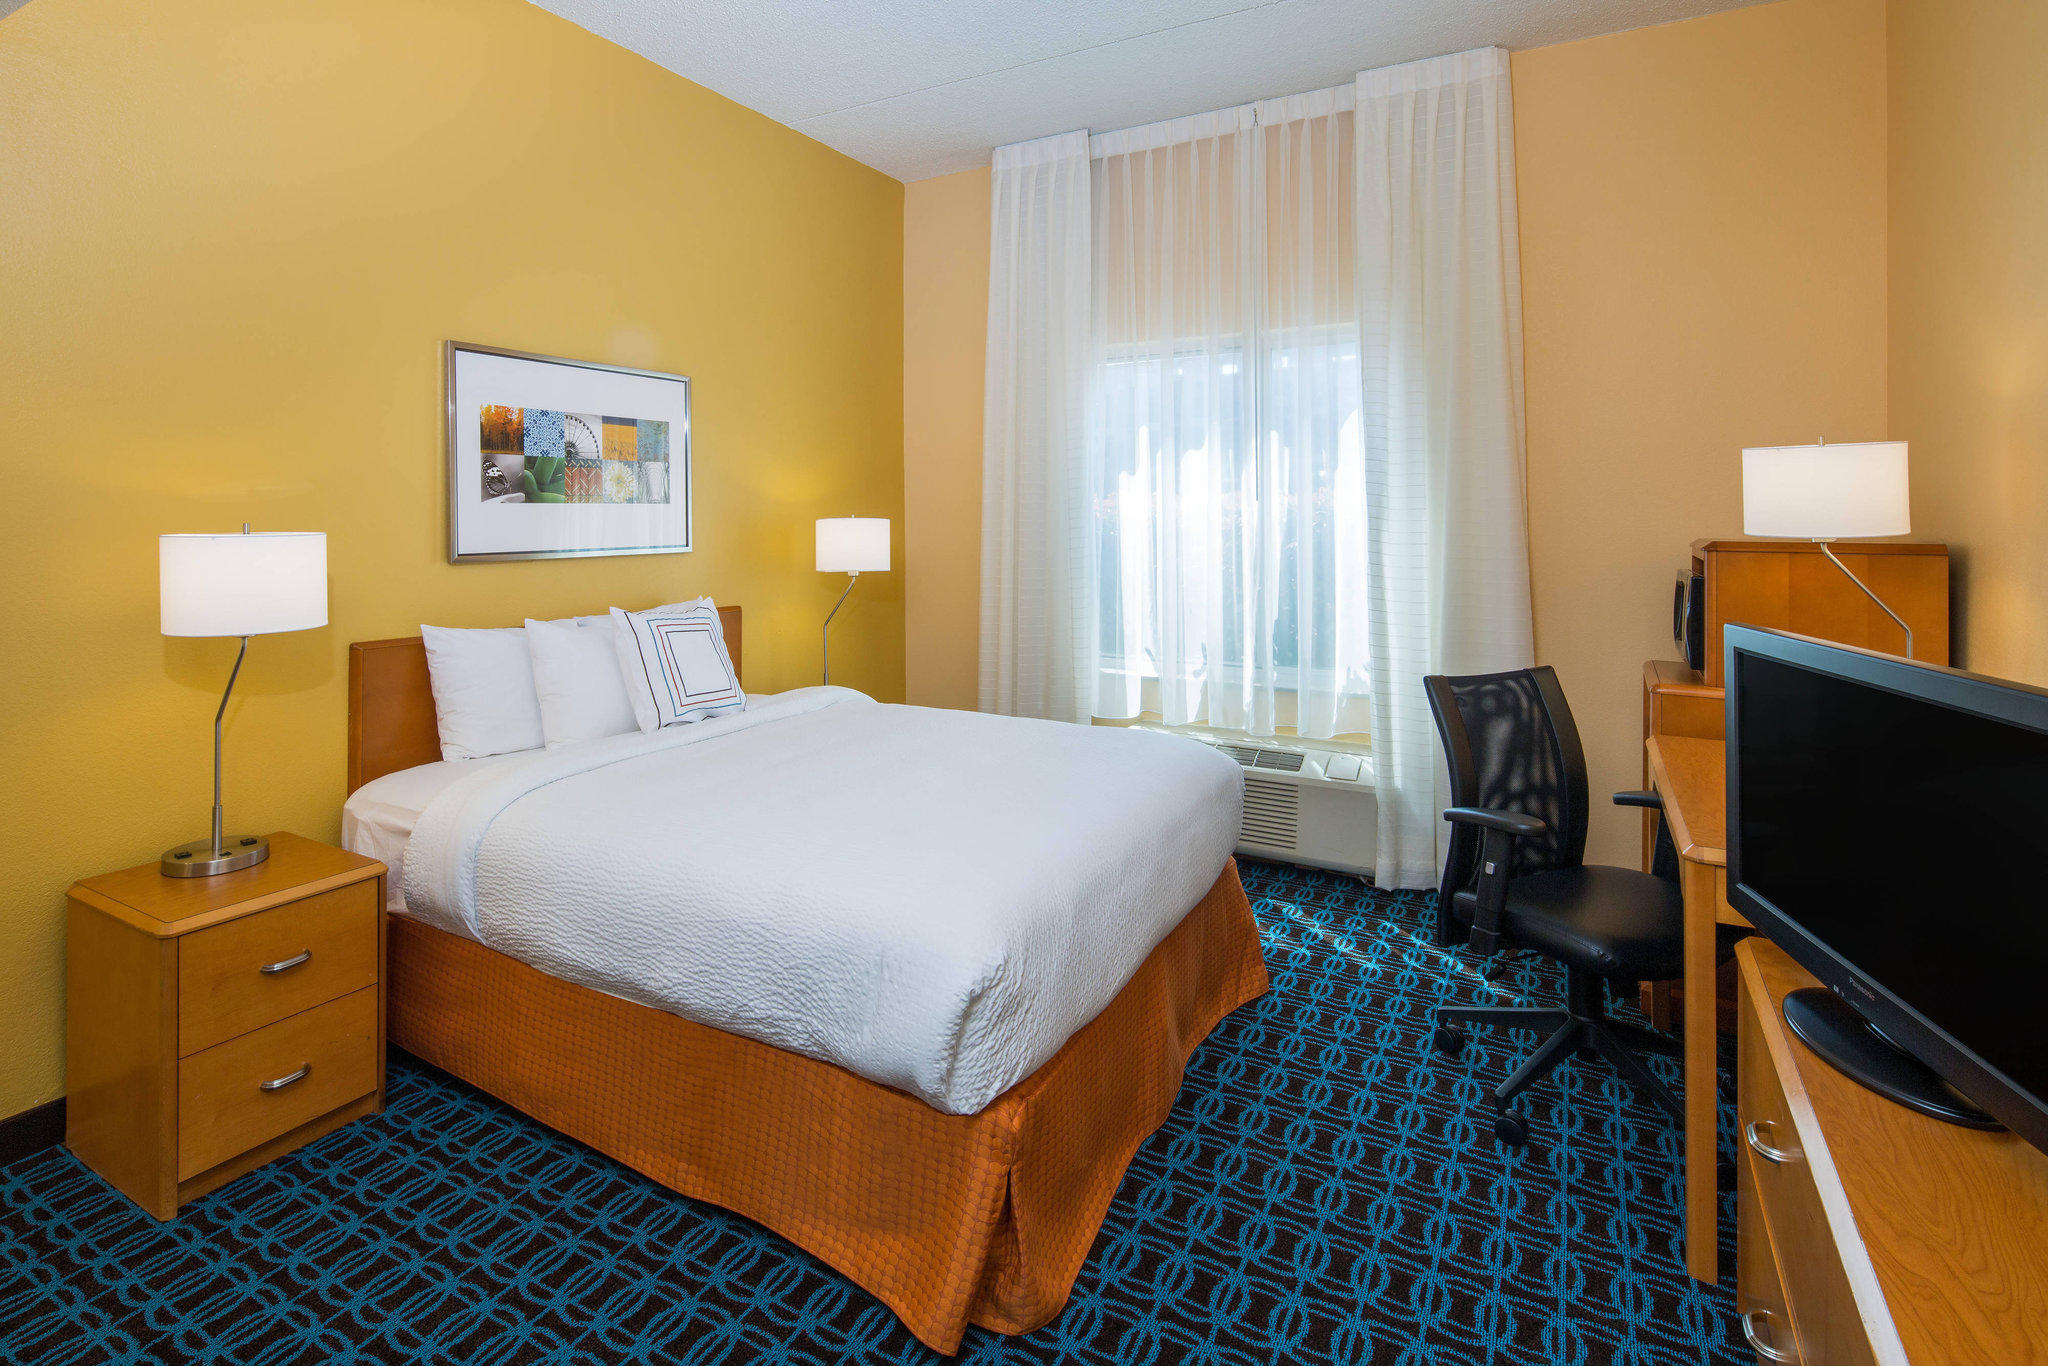 Fairfield Inn & Suites by Marriott San Antonio Airport/North Star Mall